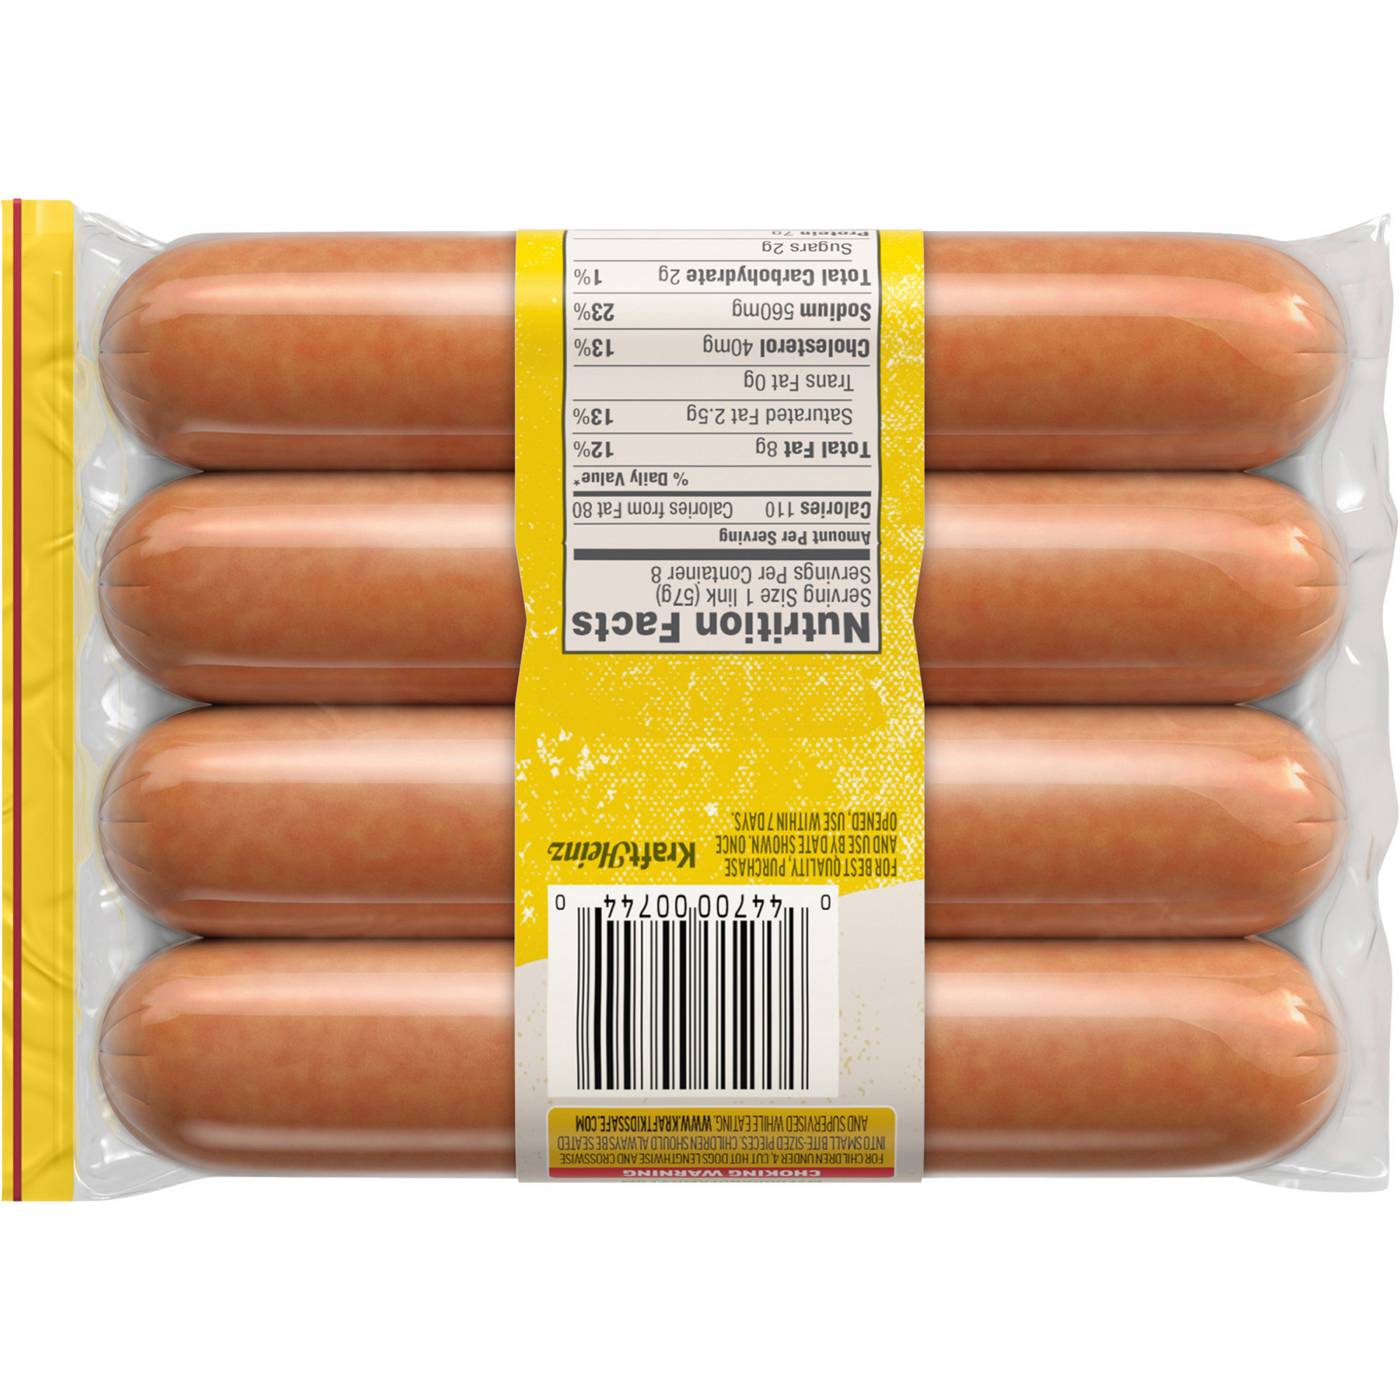 Oscar Mayer Natural Turkey Hot Dogs; image 4 of 7